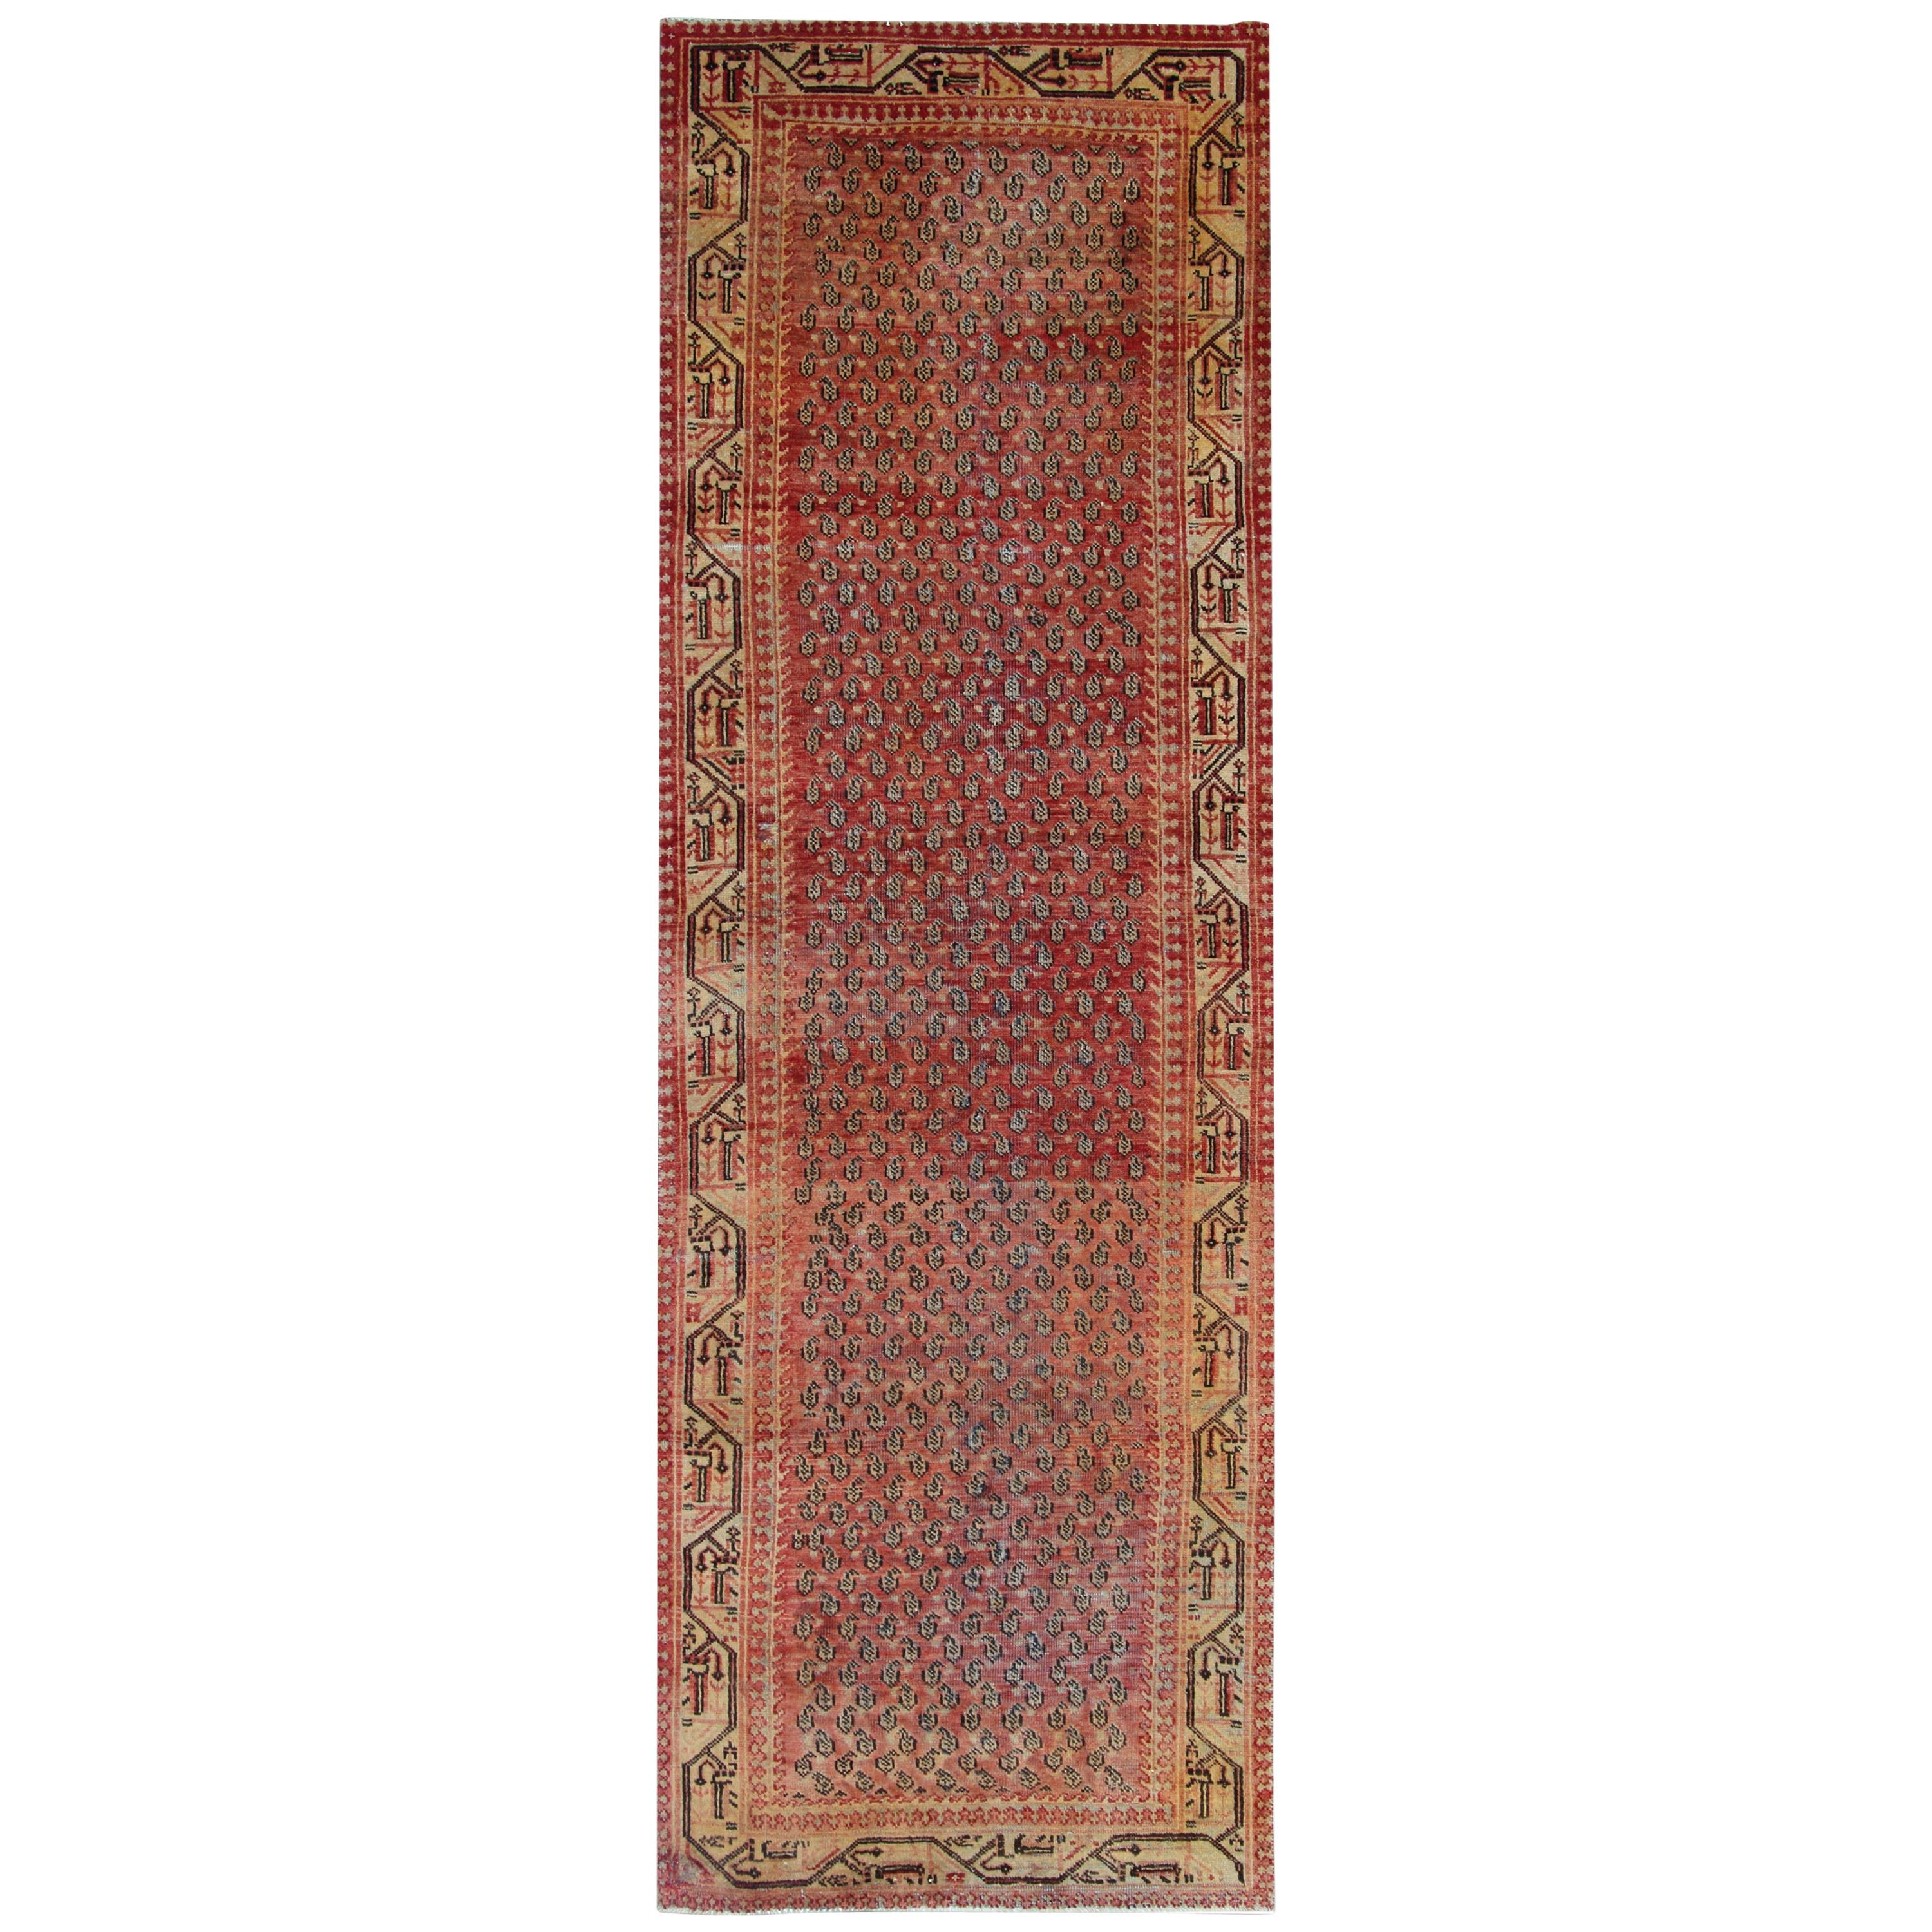 Vintage Handmade Runner Rug, Traditional Orange Wool Carpet Area Rug For Sale